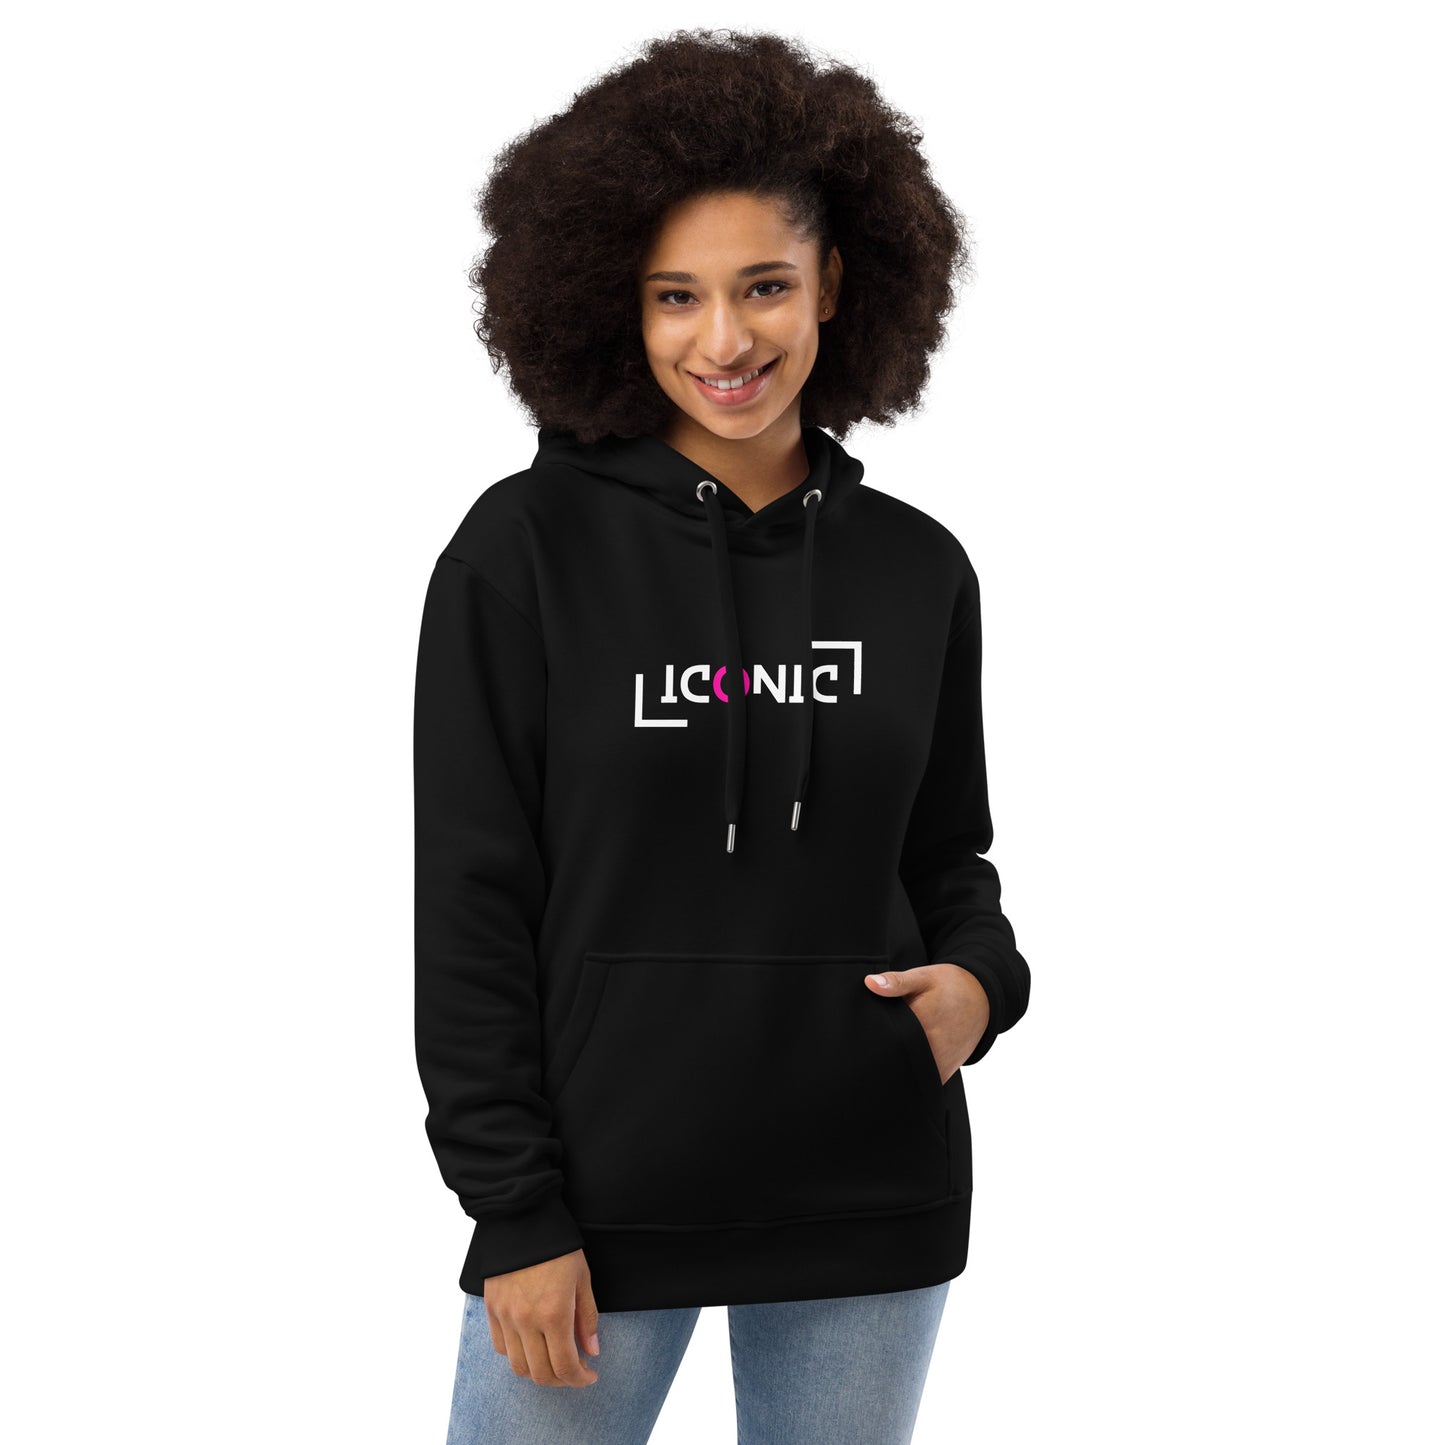 ICONIC Double-Layered premium hoodie